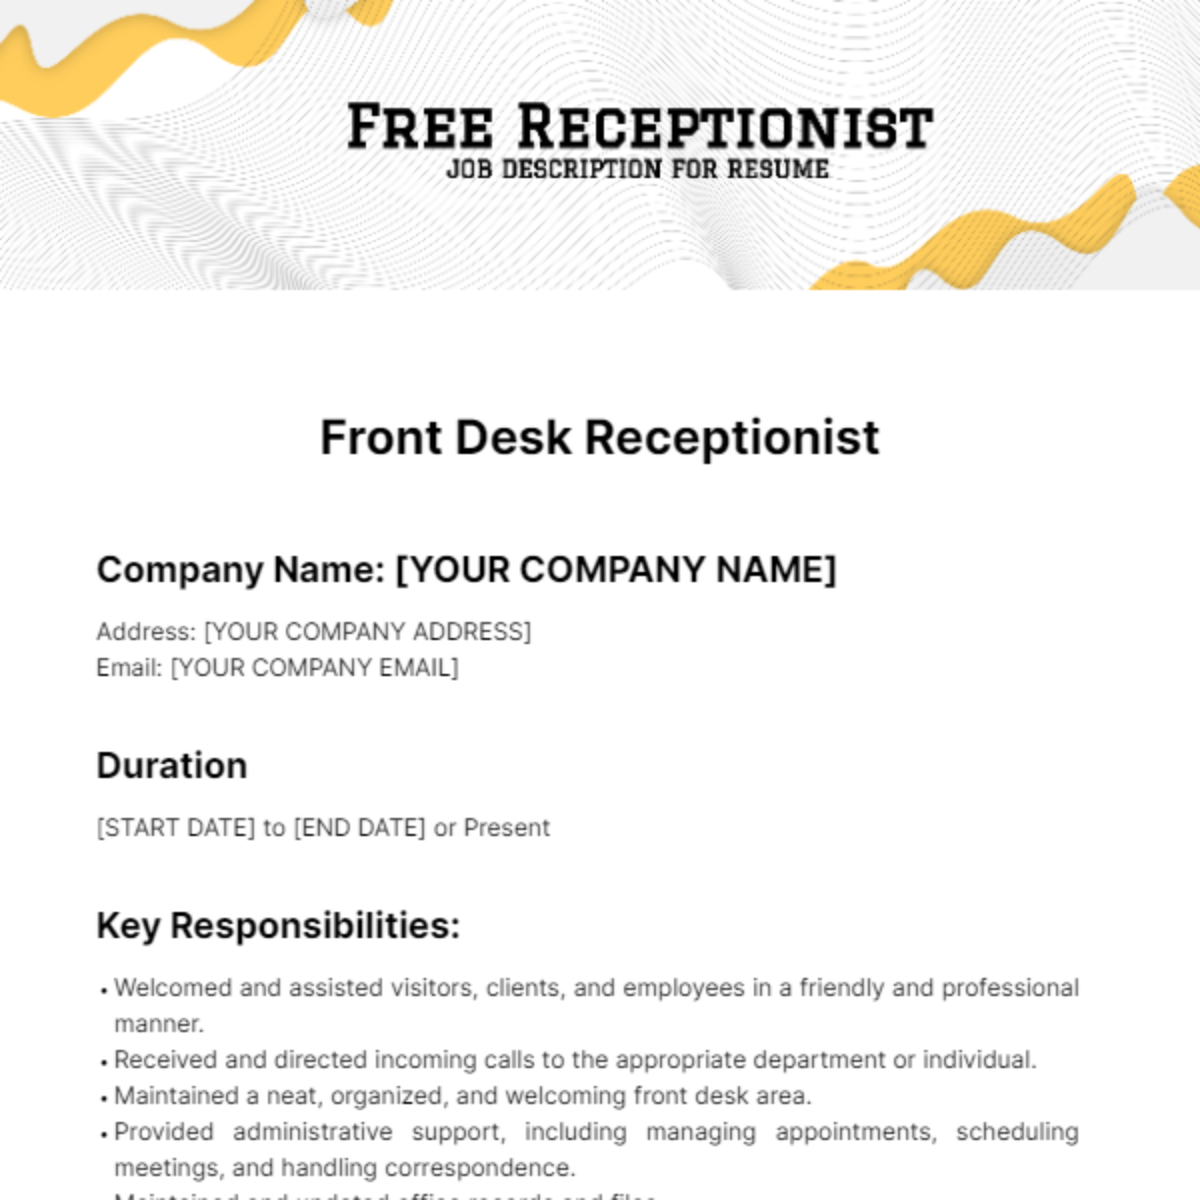 Receptionist Job Description for Resume Template